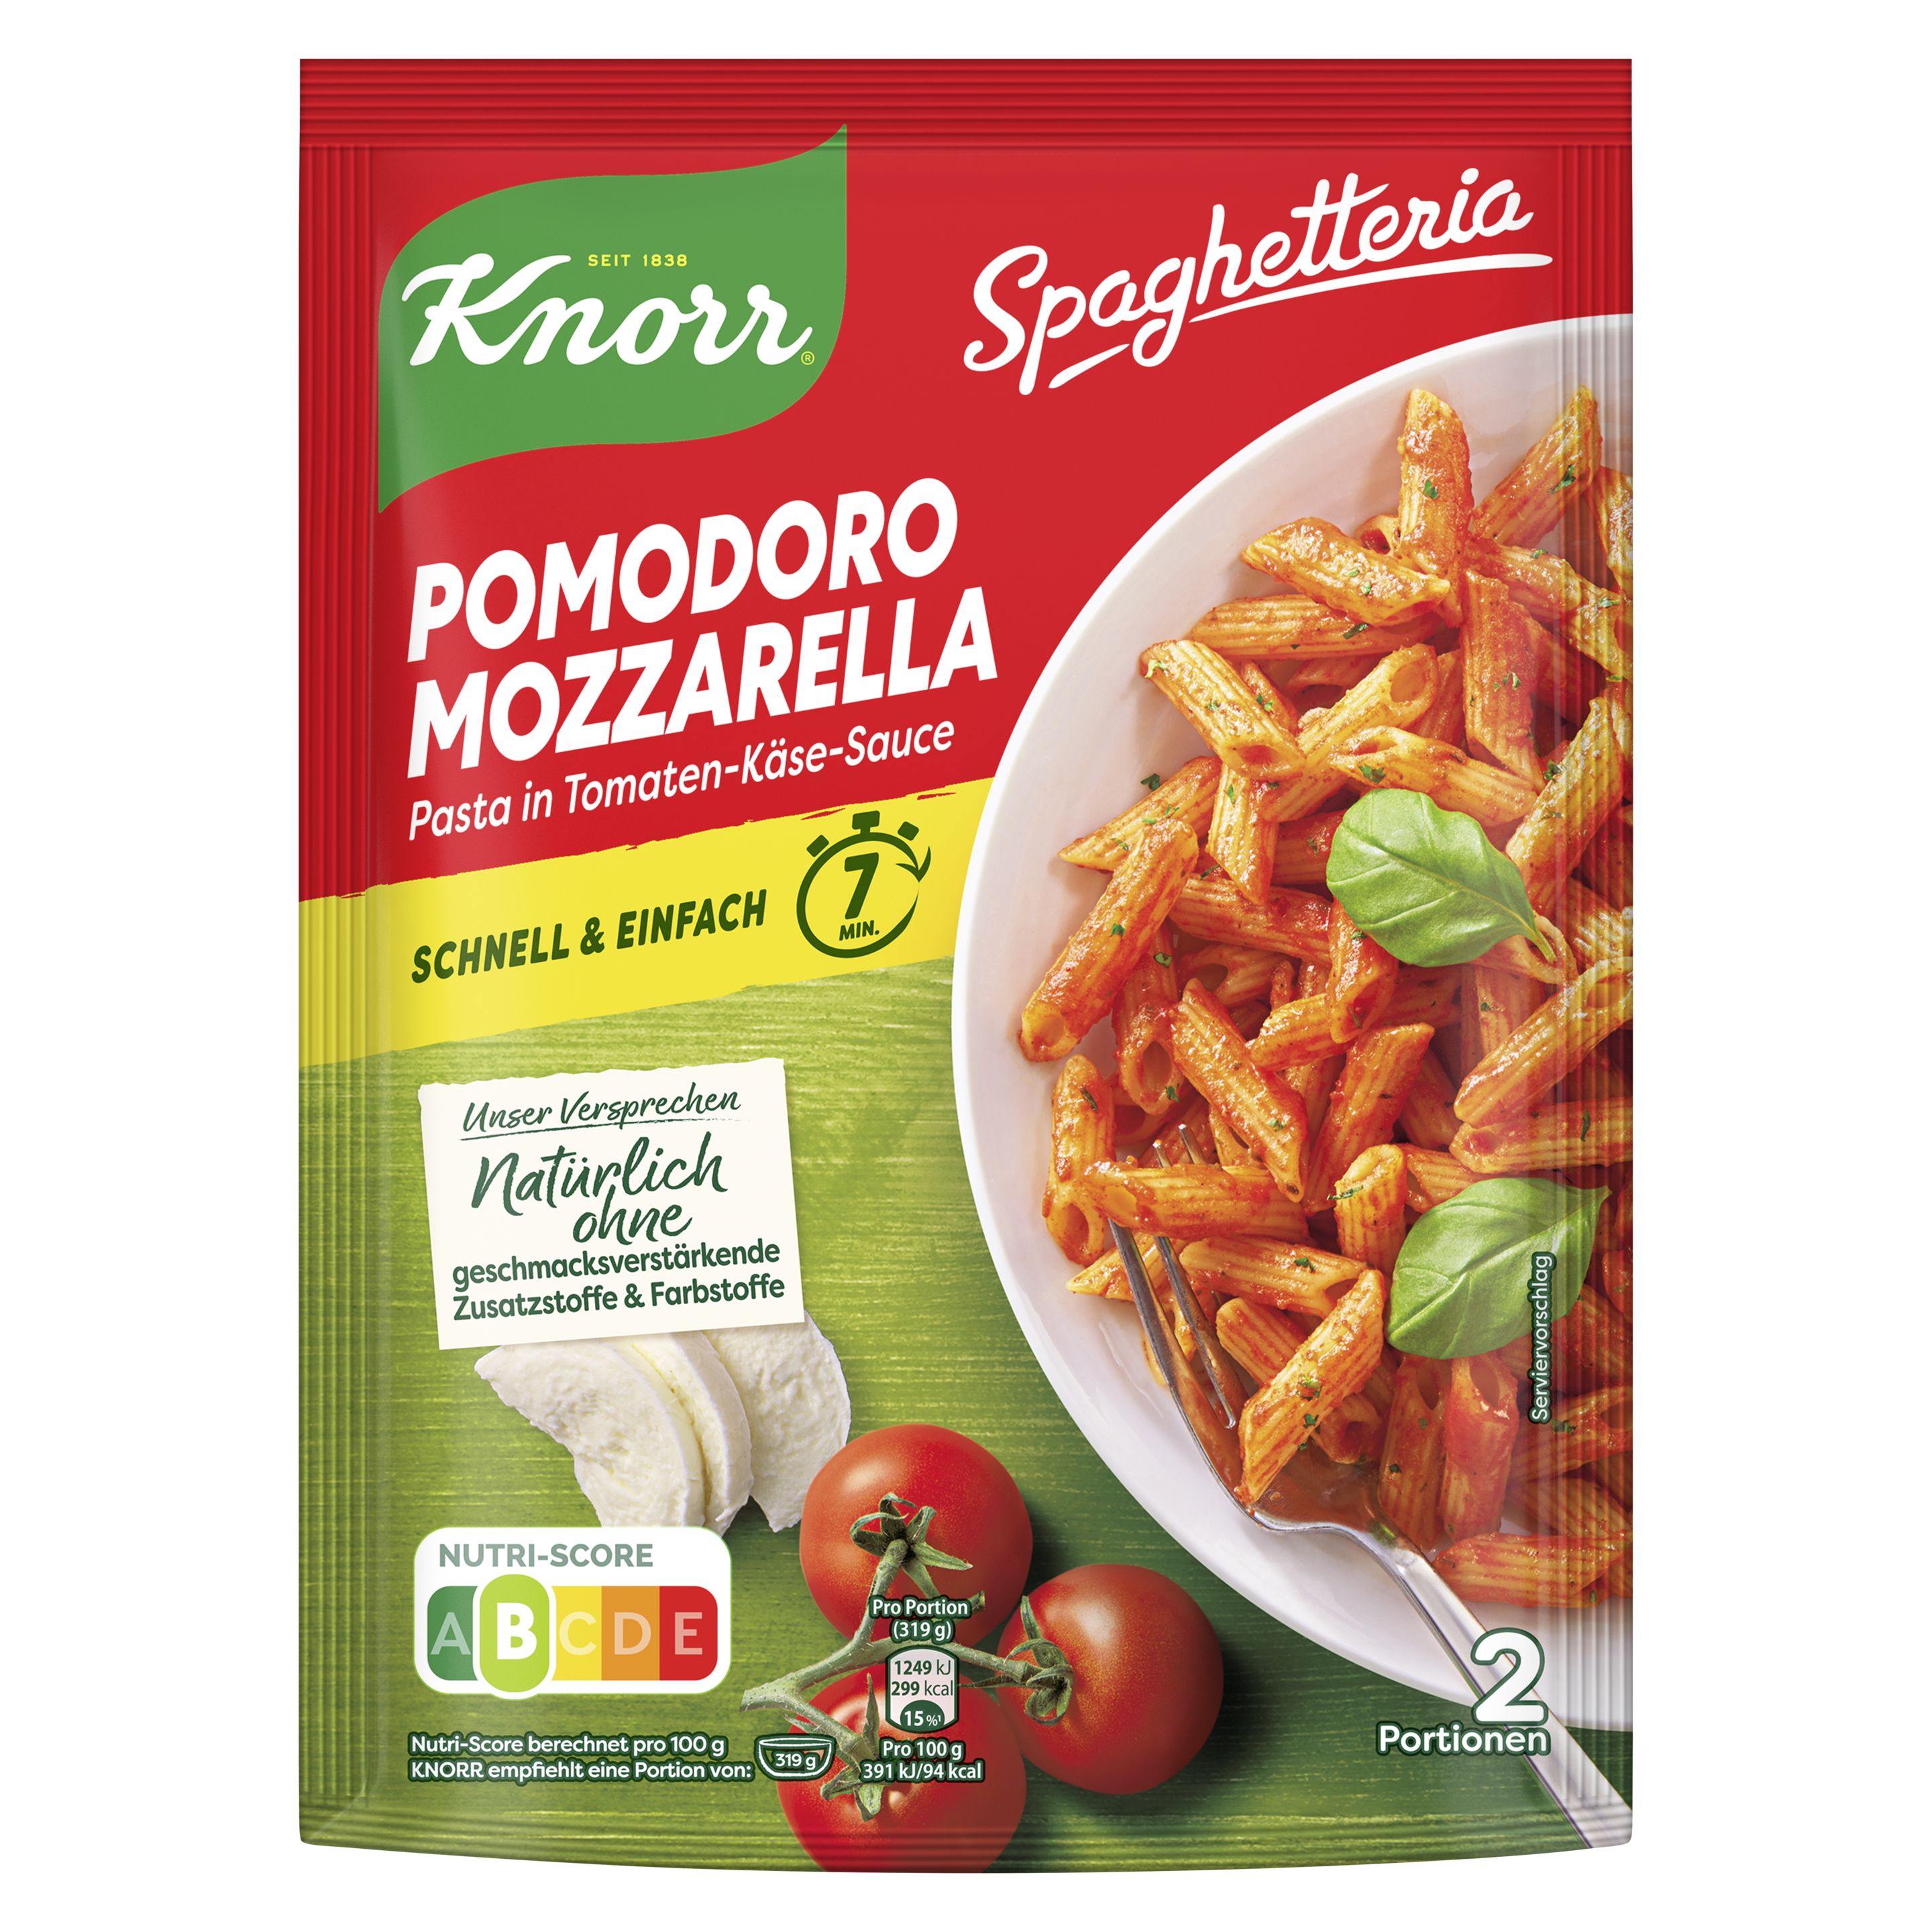 Knorr Spaghetteria Pomodoro Mozzarella Pasta in Tomaten-Käse-Sauce 163 g